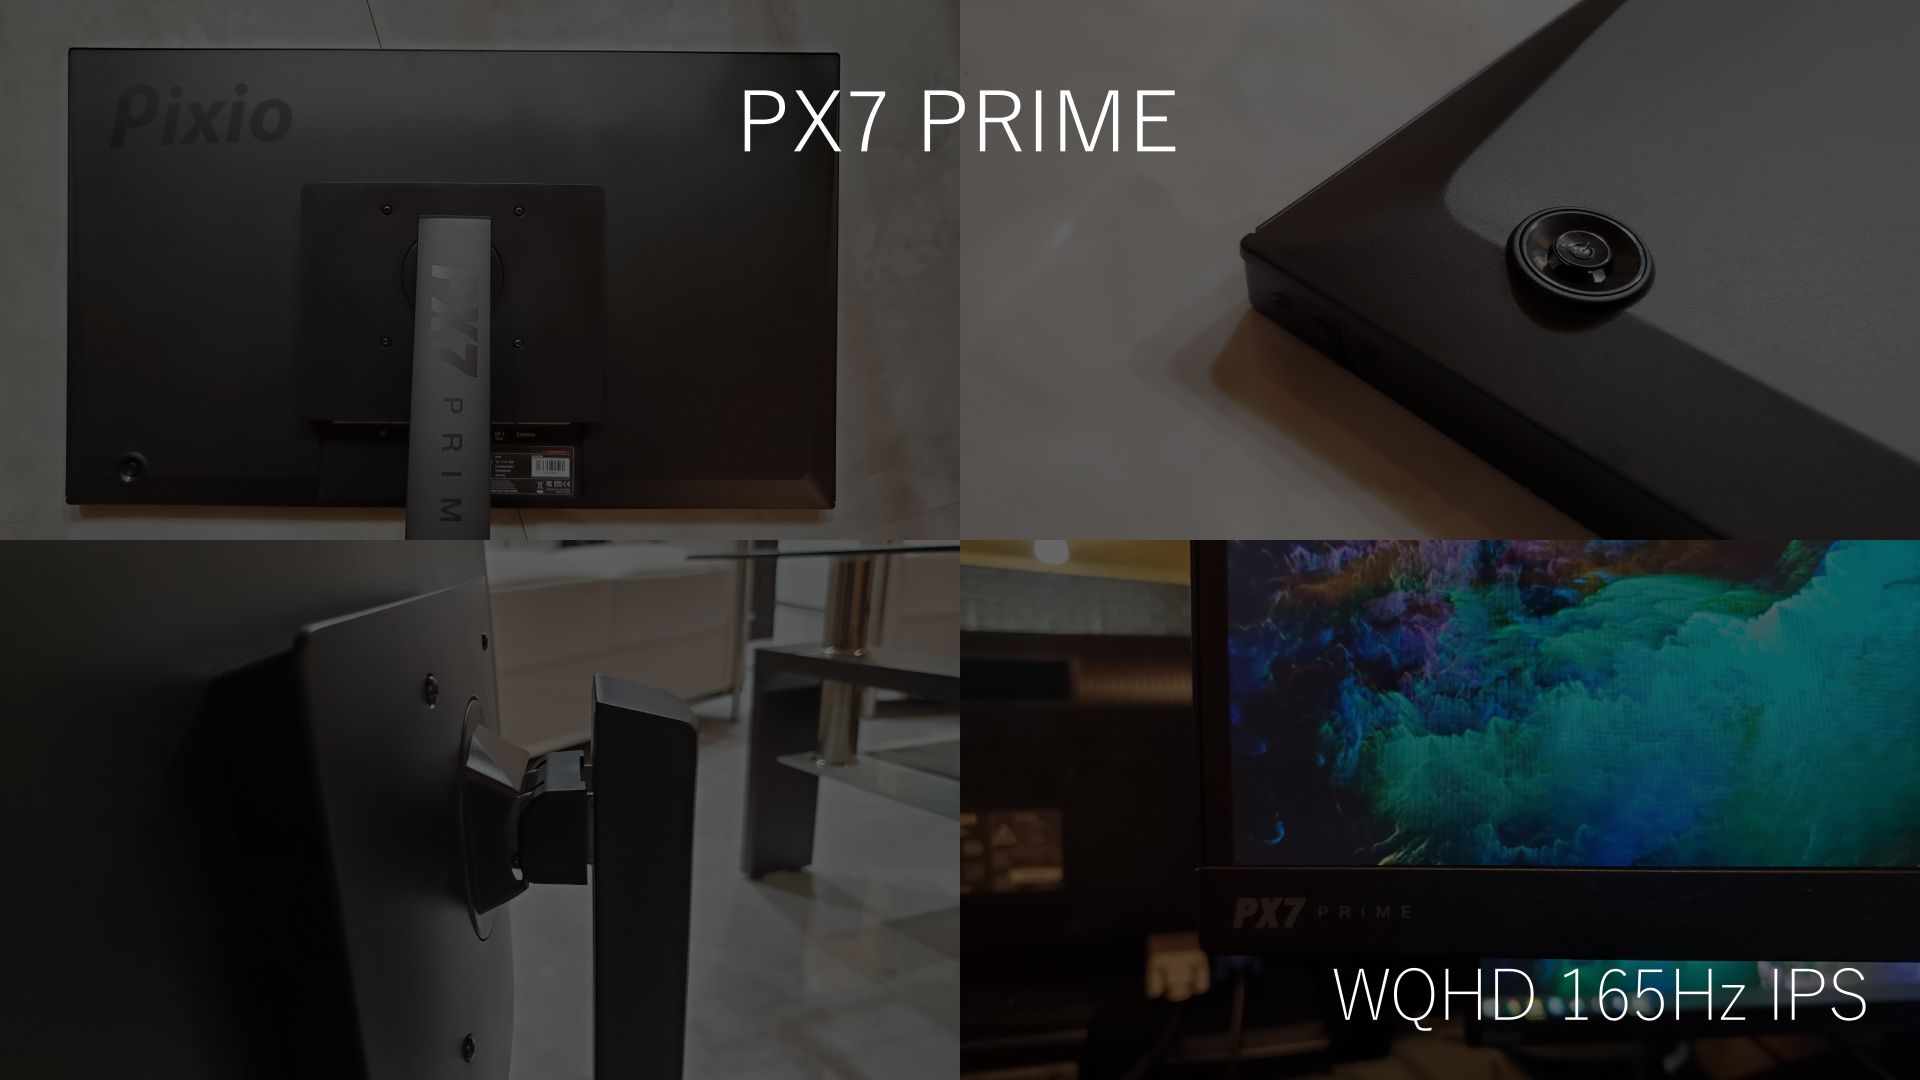 Pixio PX7 Prime」レビュー - 165Hz/IPS/WQHDと詰め込みまくった最高峰 